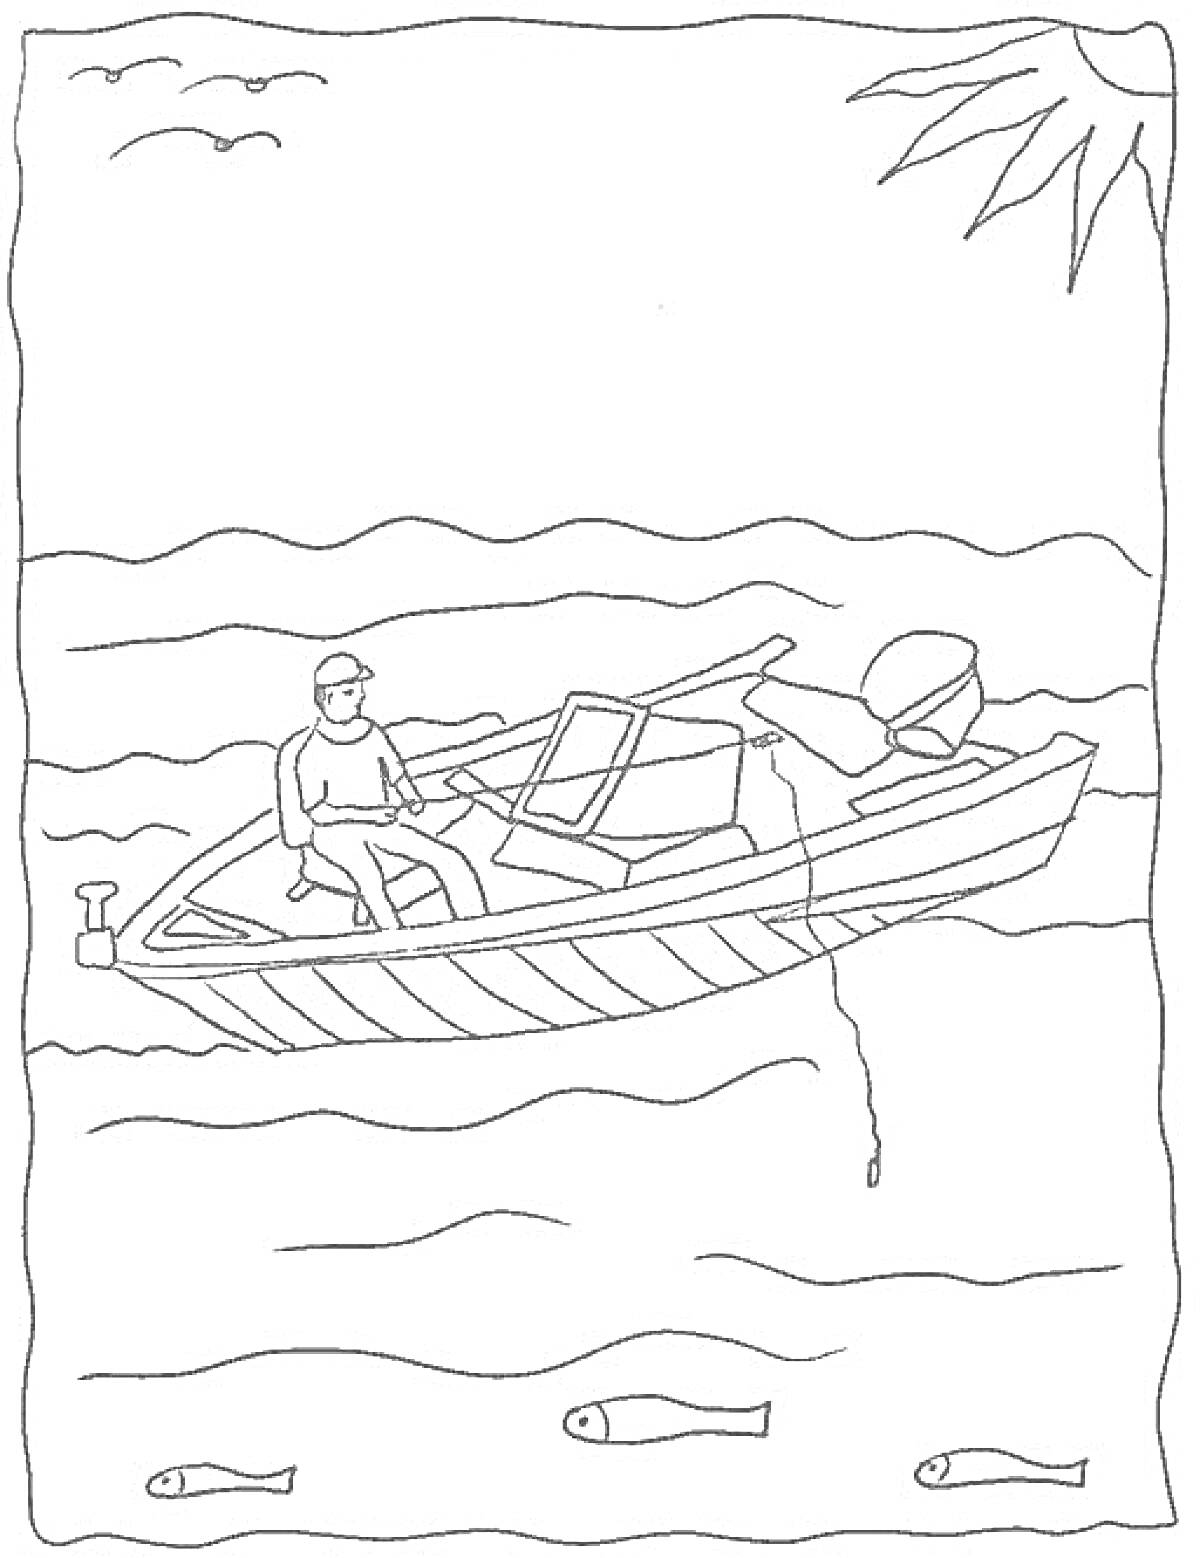 На раскраске изображено: Рыбалка, Лодка, Рыбак, Река, Удочка, Солнце, Природа, Отдых, Рыба, Птица